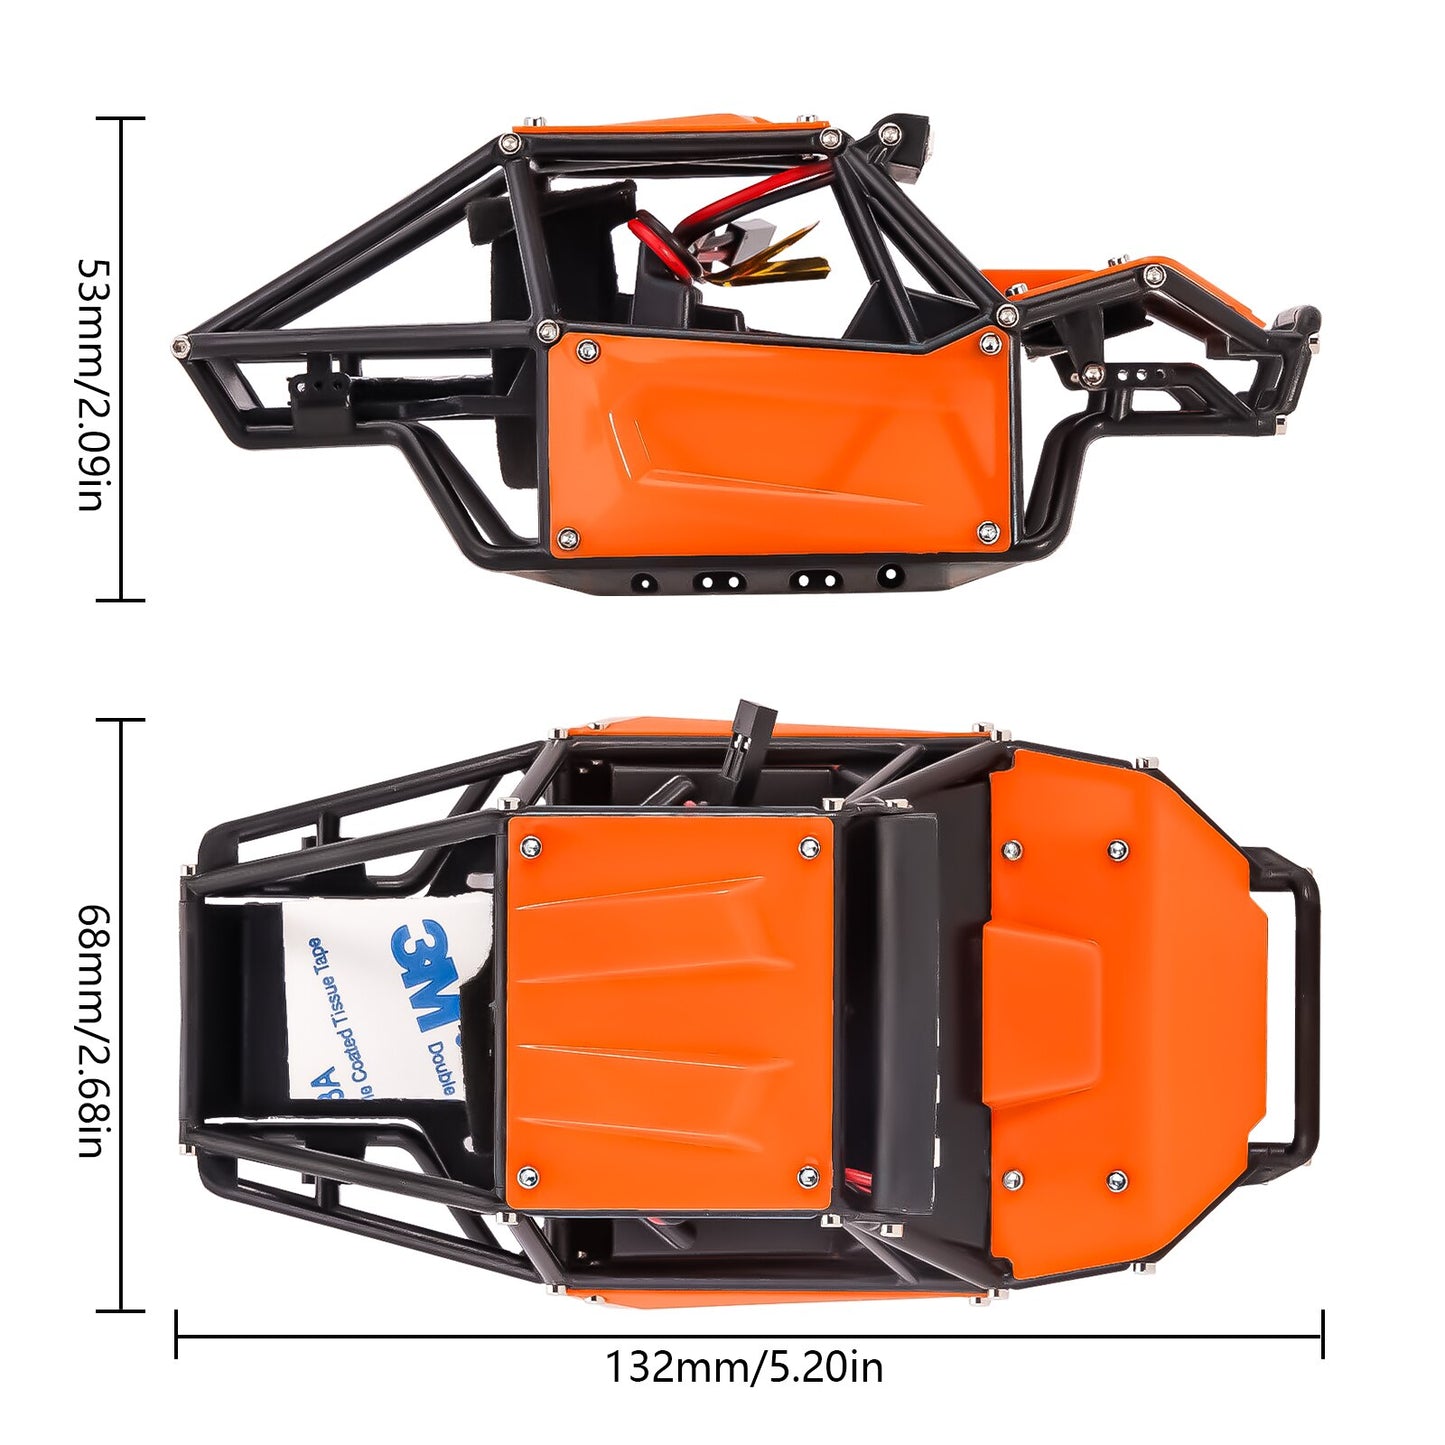 INJORA Nylon Rock Buggy Body Shell Chassis Kit voor 1/24 RC Crawler Auto Axiale SCX24 C10 JEEP JLU Bronco upgrade Onderdelen